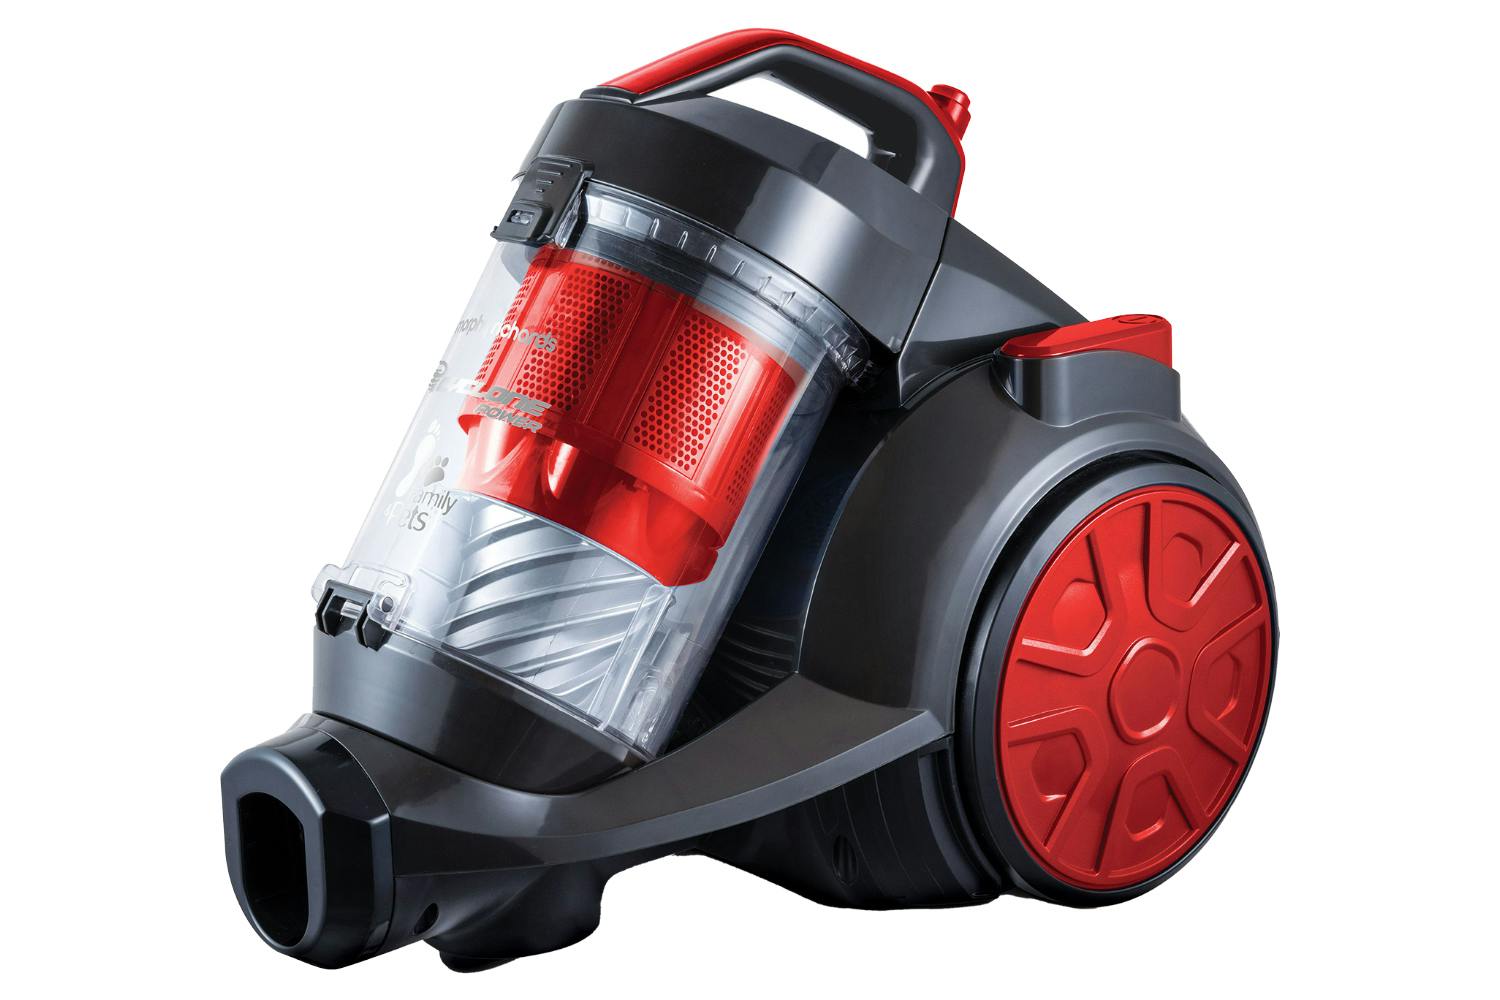 Buy ESSENTIALS C700VC18 Cylinder Bagless Vacuum Cleaner - Red